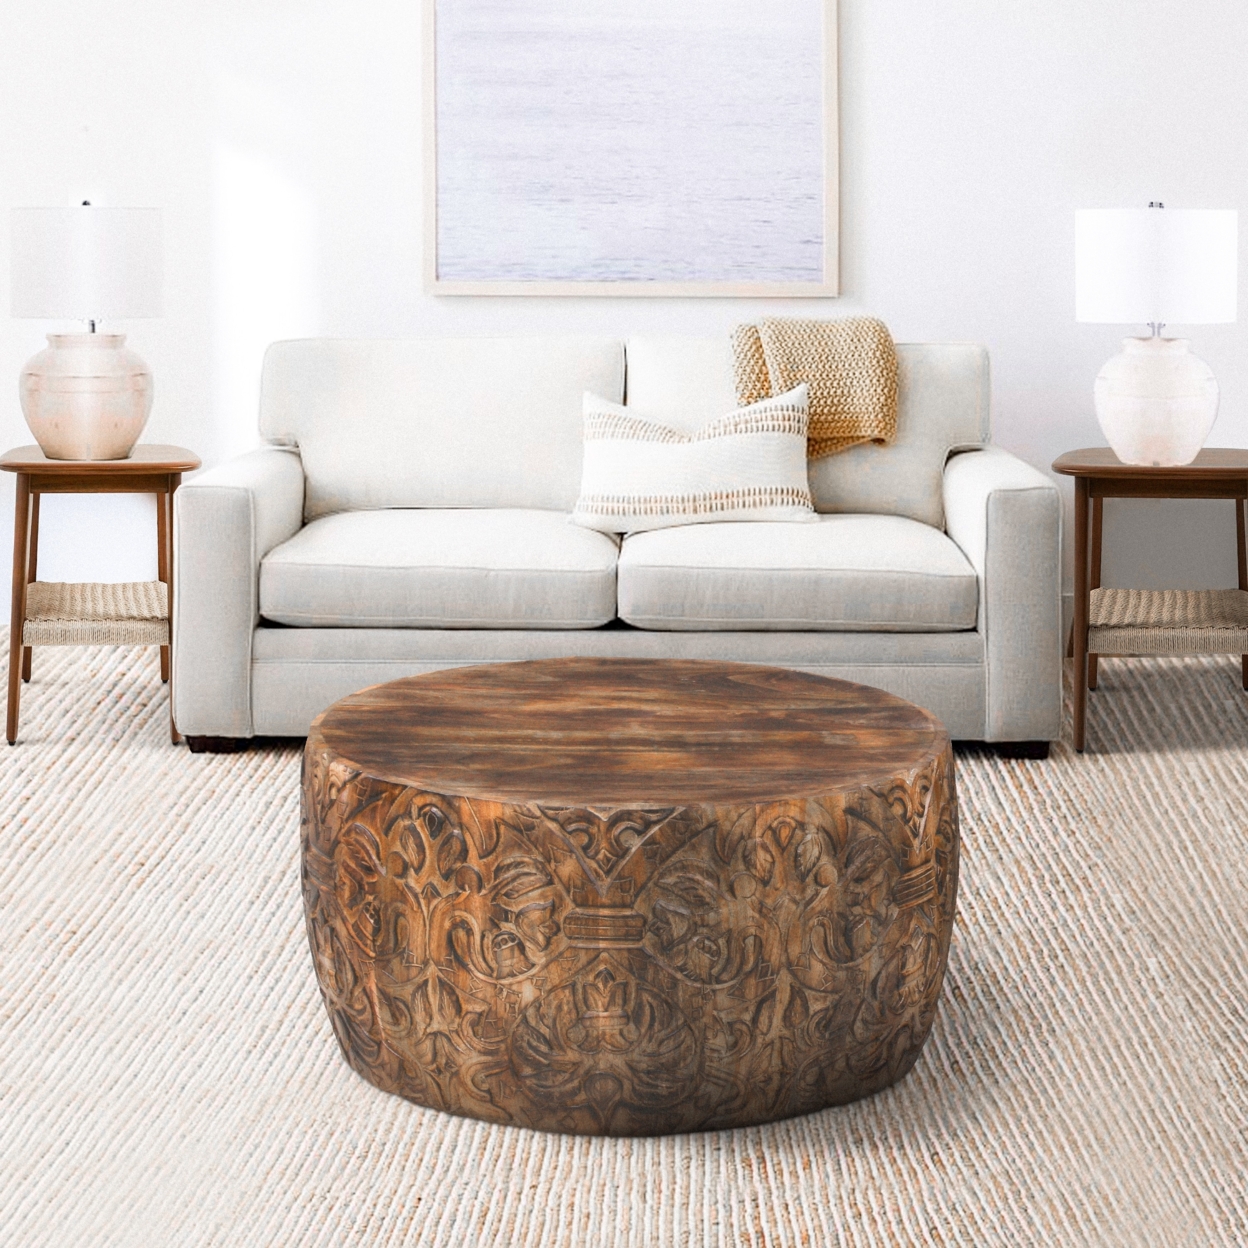 Rea 34 Inch Handcrafted Mango Wood Coffee Table, Round Drum Shape, Carved Damask Pattern, Walnut Brown- Saltoro Sherpi